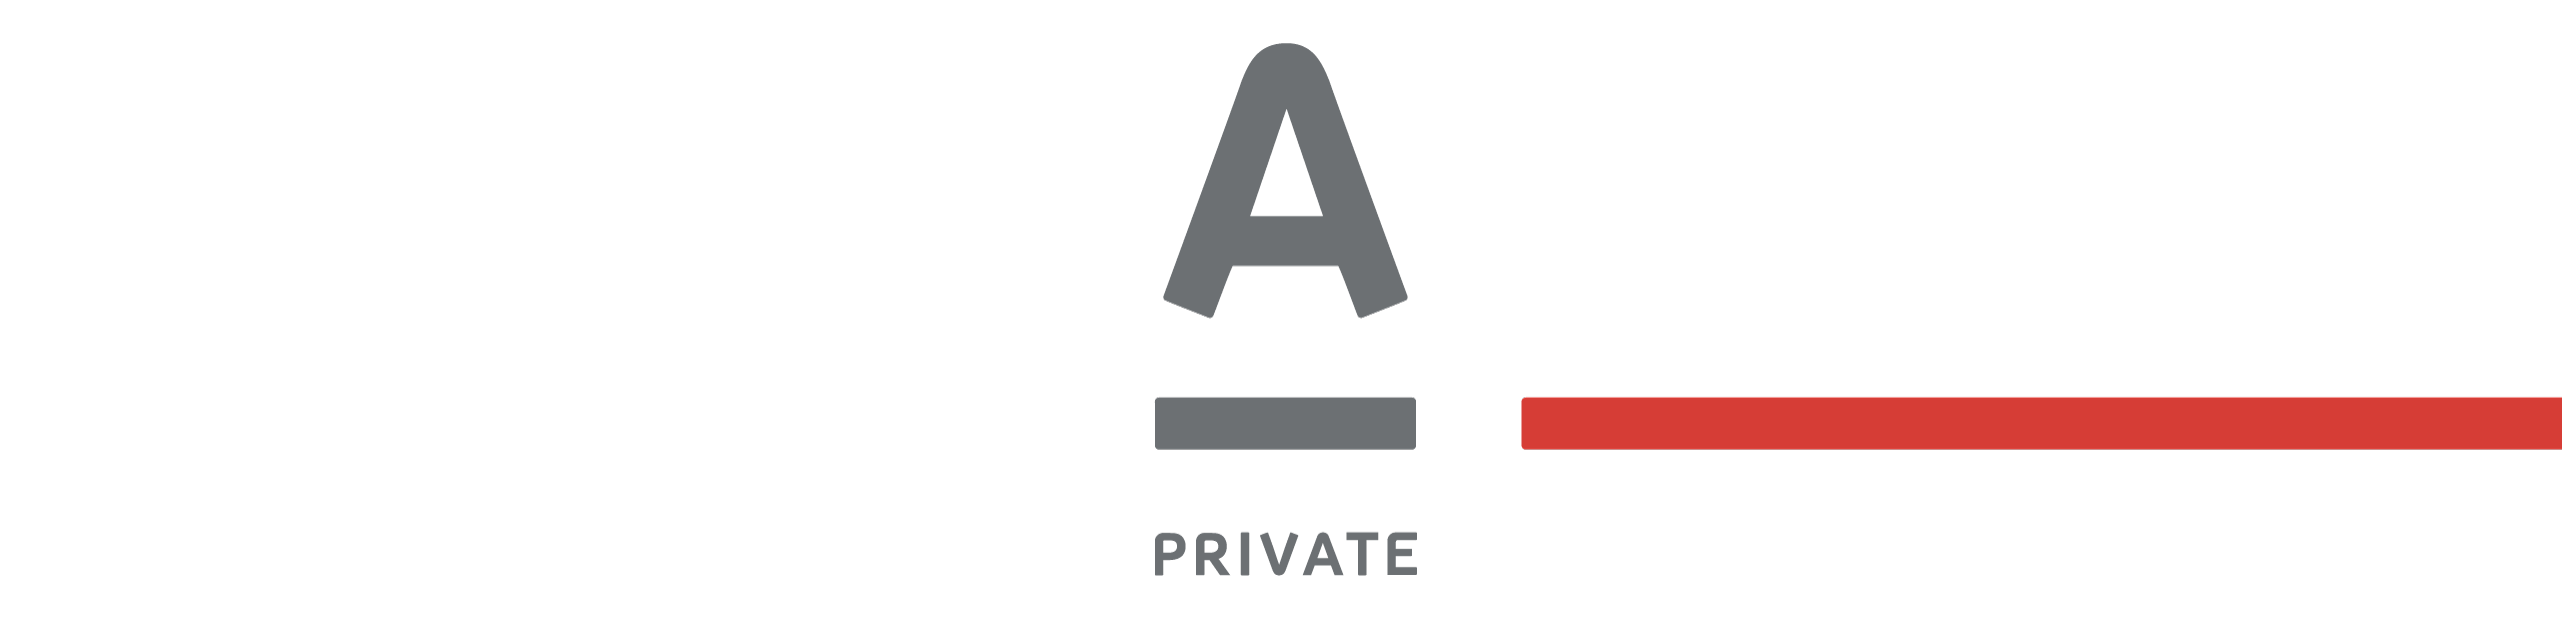 alfaprivate logo full